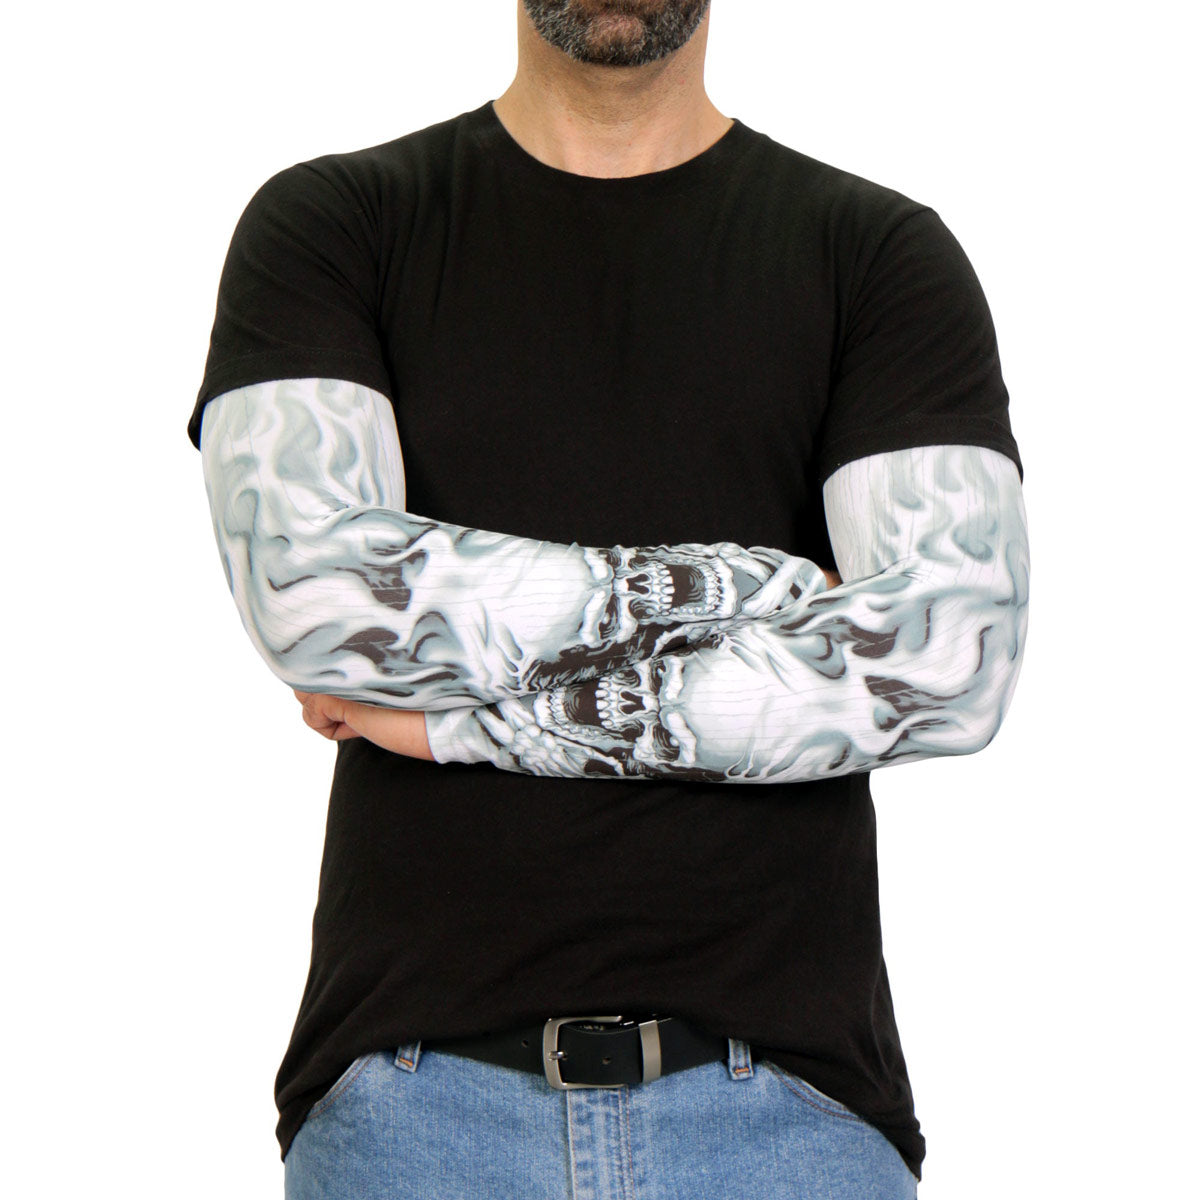 Hot Leathers ARM1002 Assassin Arm Sleeve